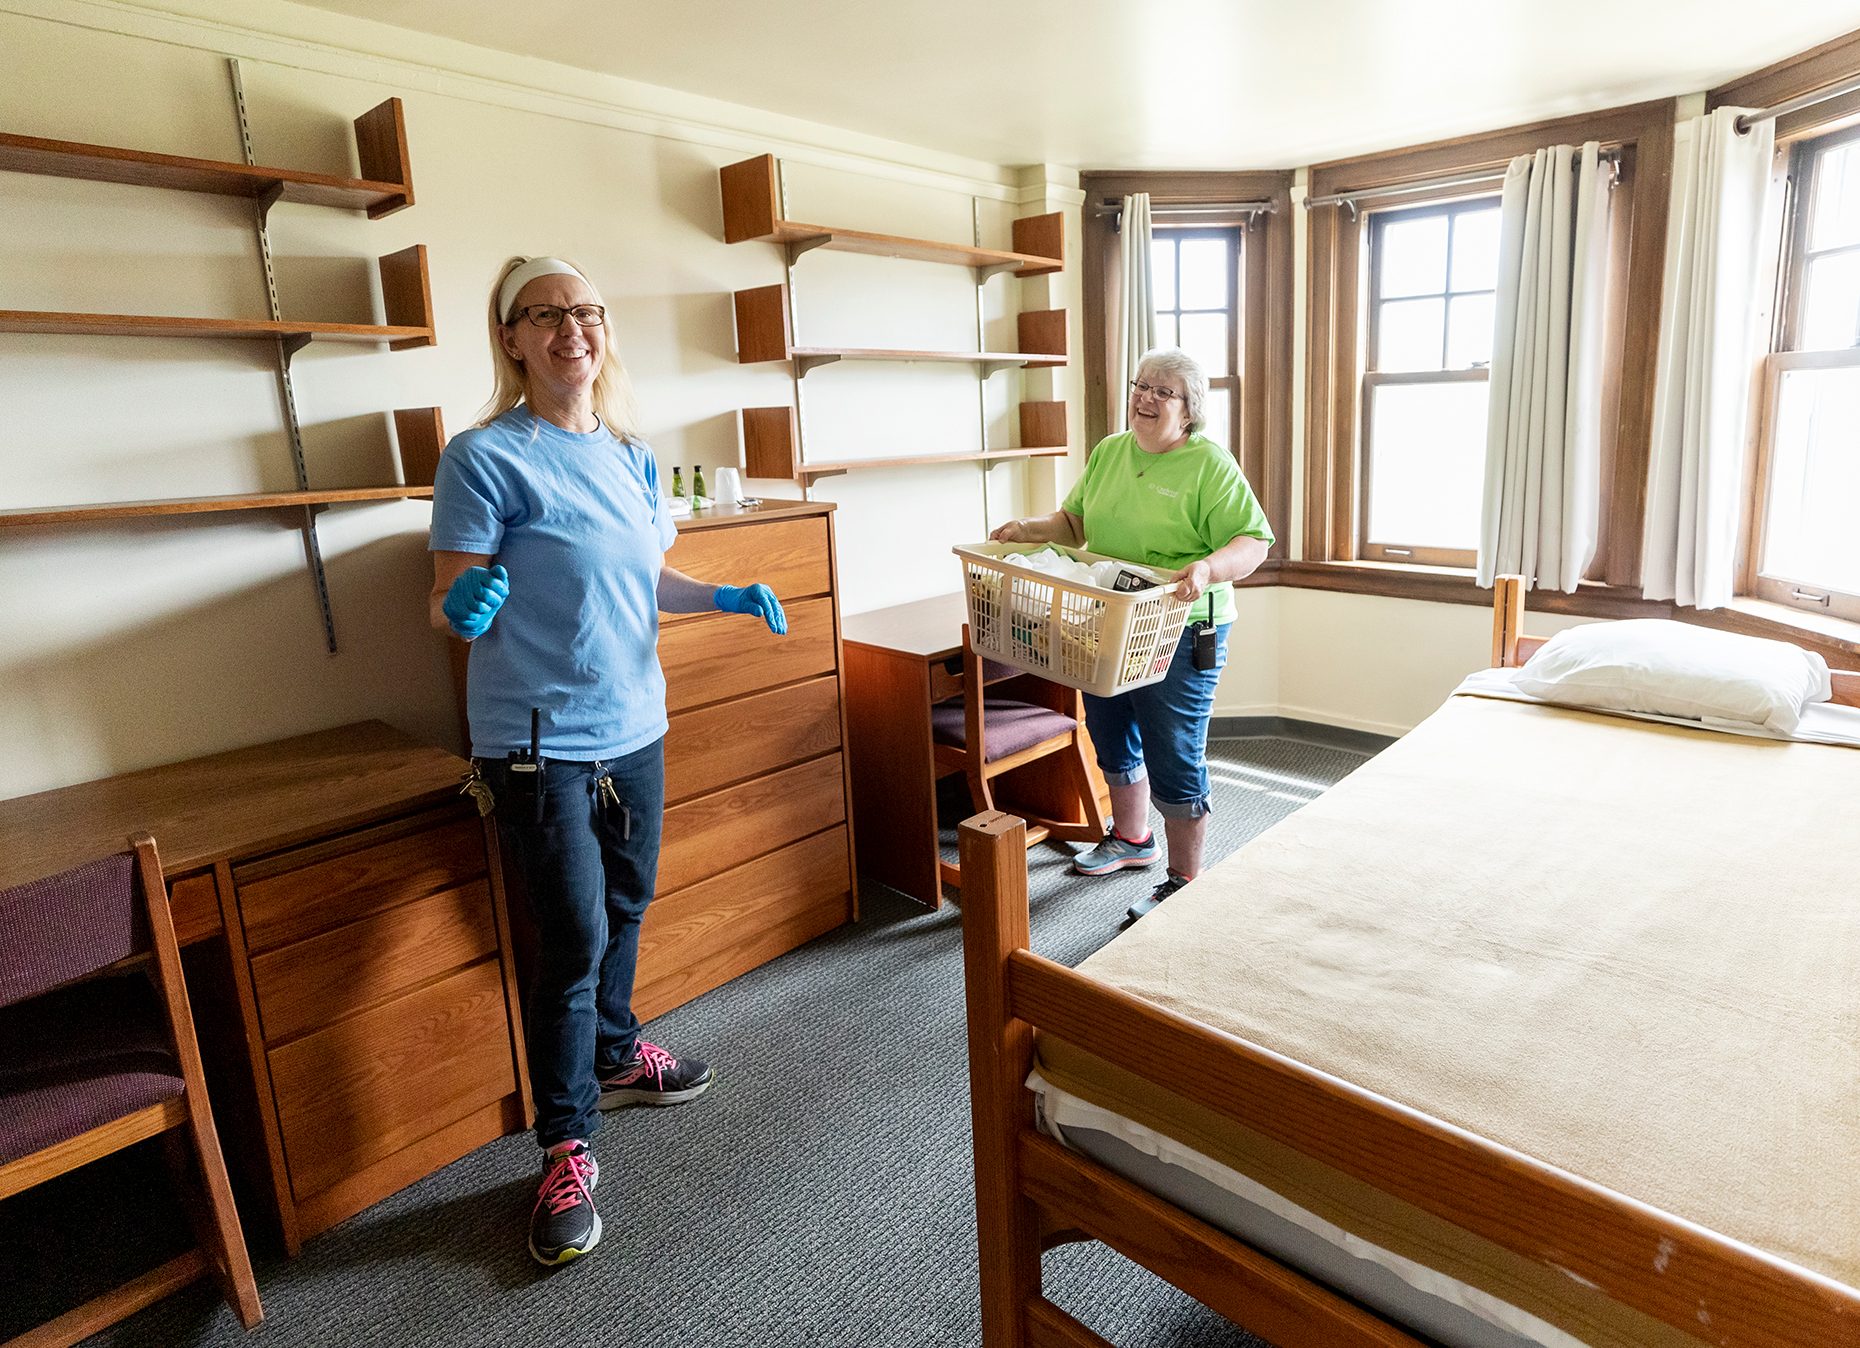 Custodians clean a dorm room in preparation for reunion